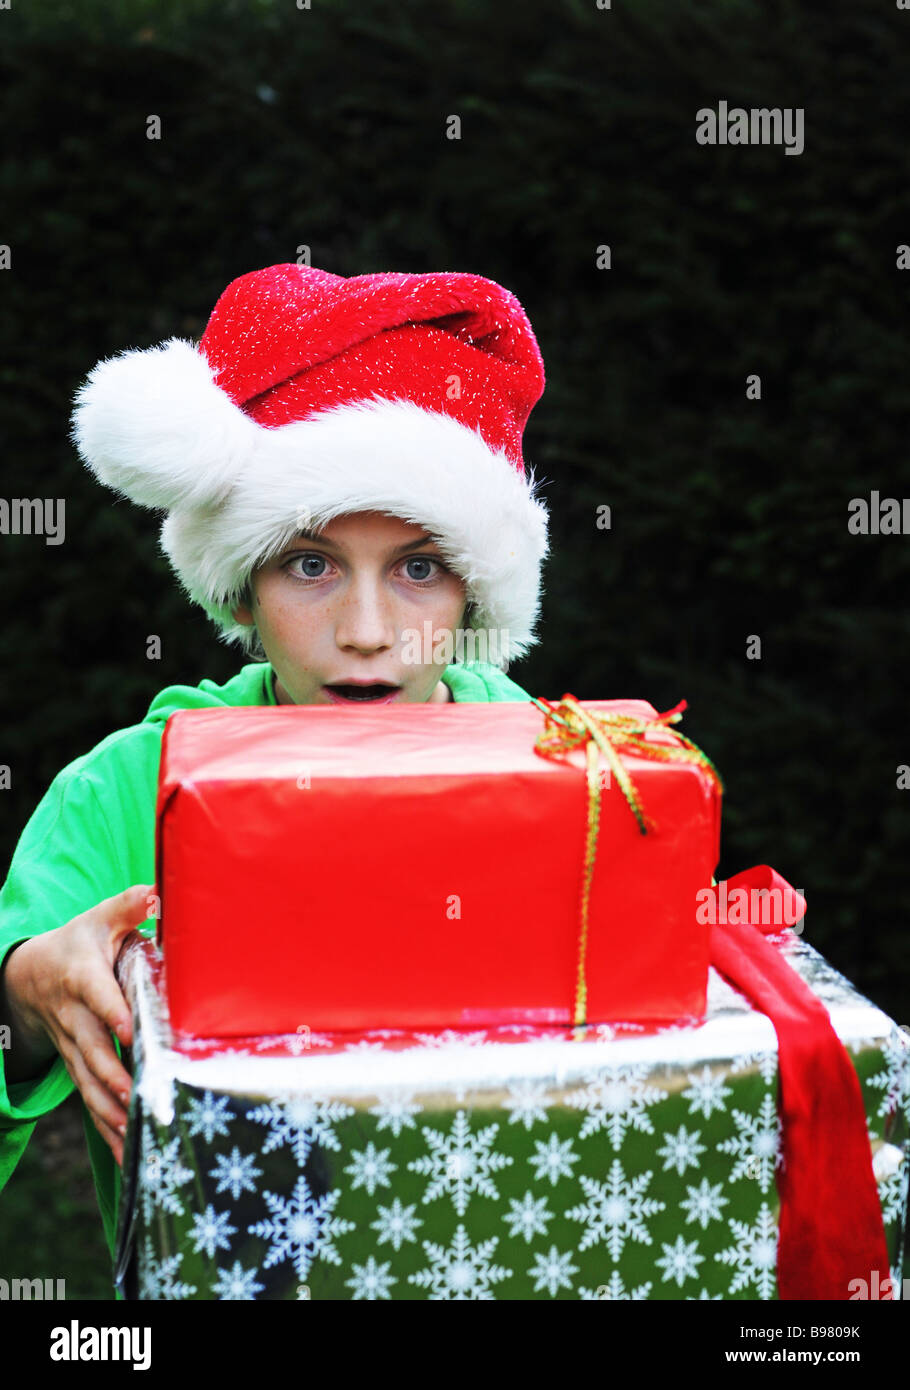 boy in santa hat receiving presents Stock Photo